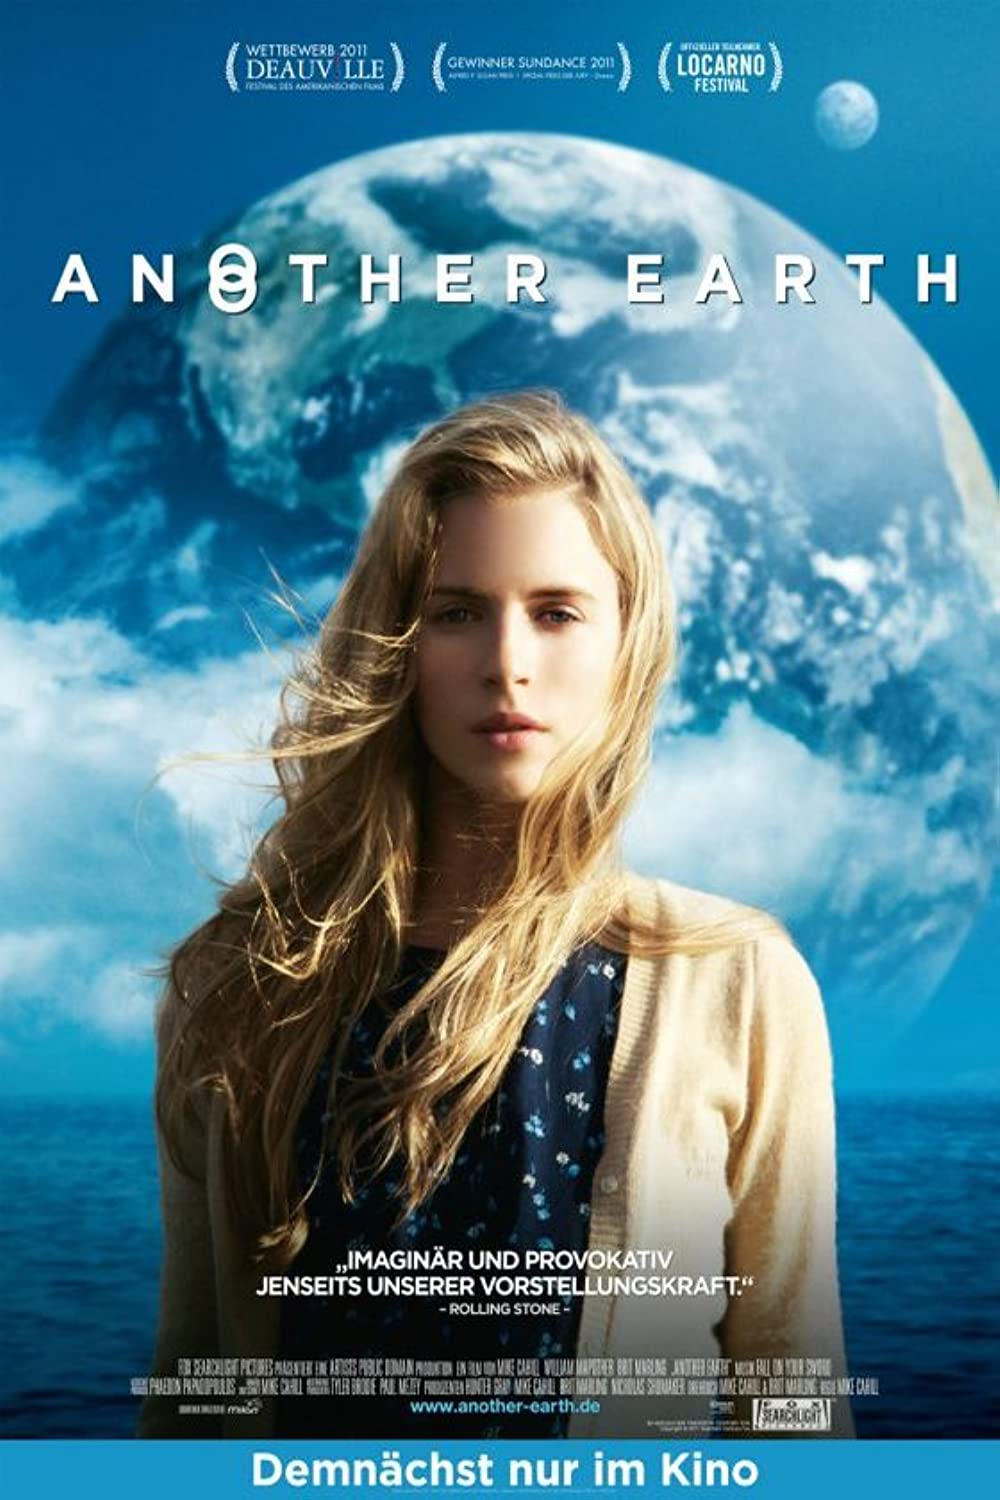 Filmbeschreibung zu Another Earth (OV)